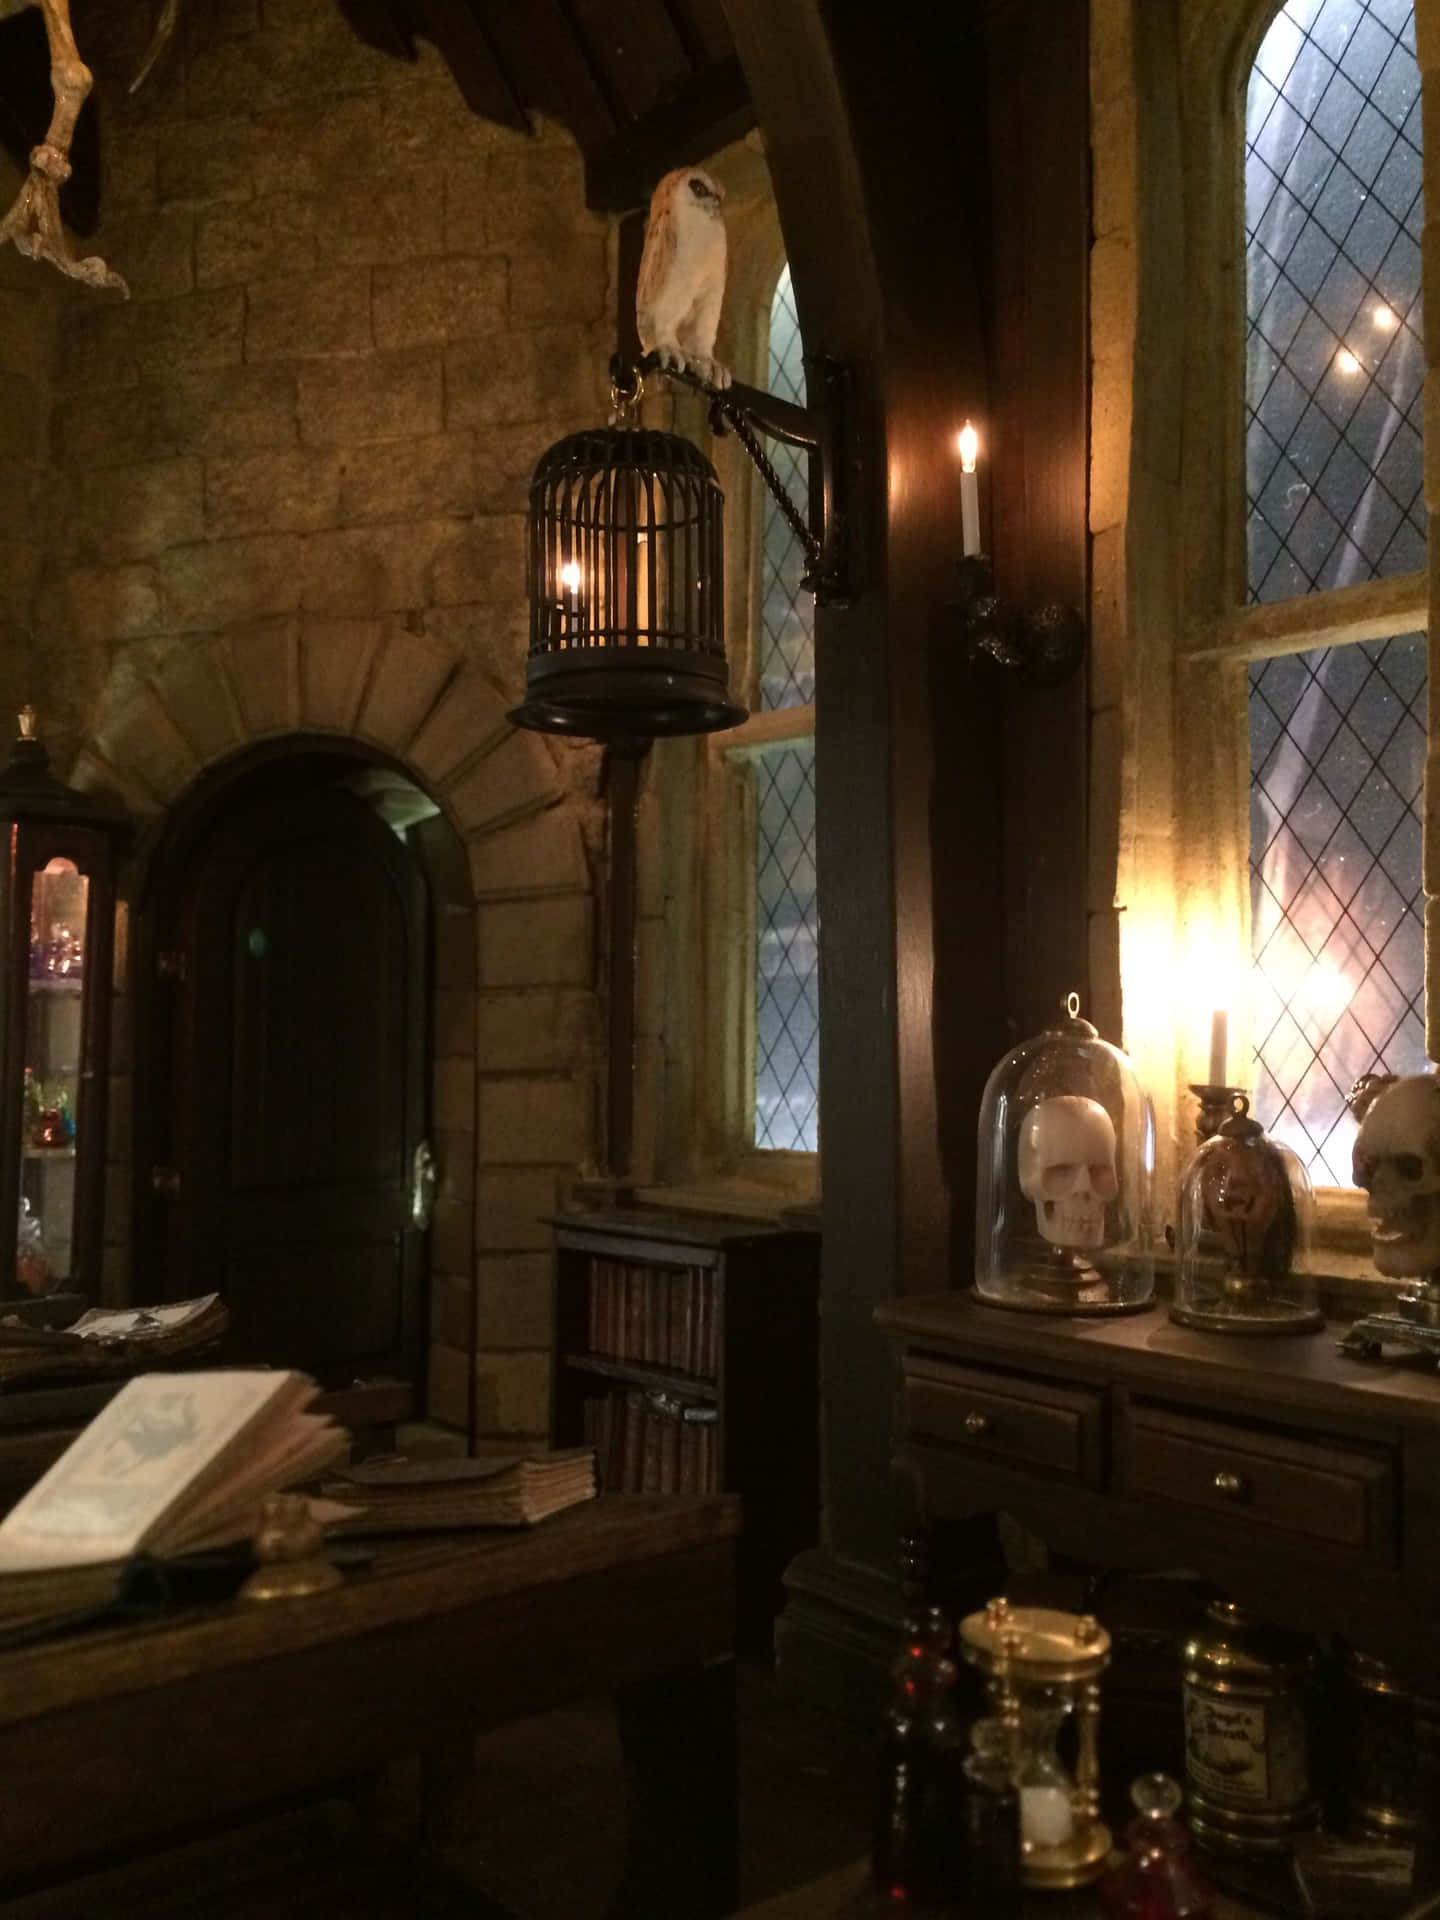 Enter the Hogwarts Dark Arts Classroom and unlock the secrets of the dark arts. Wallpaper